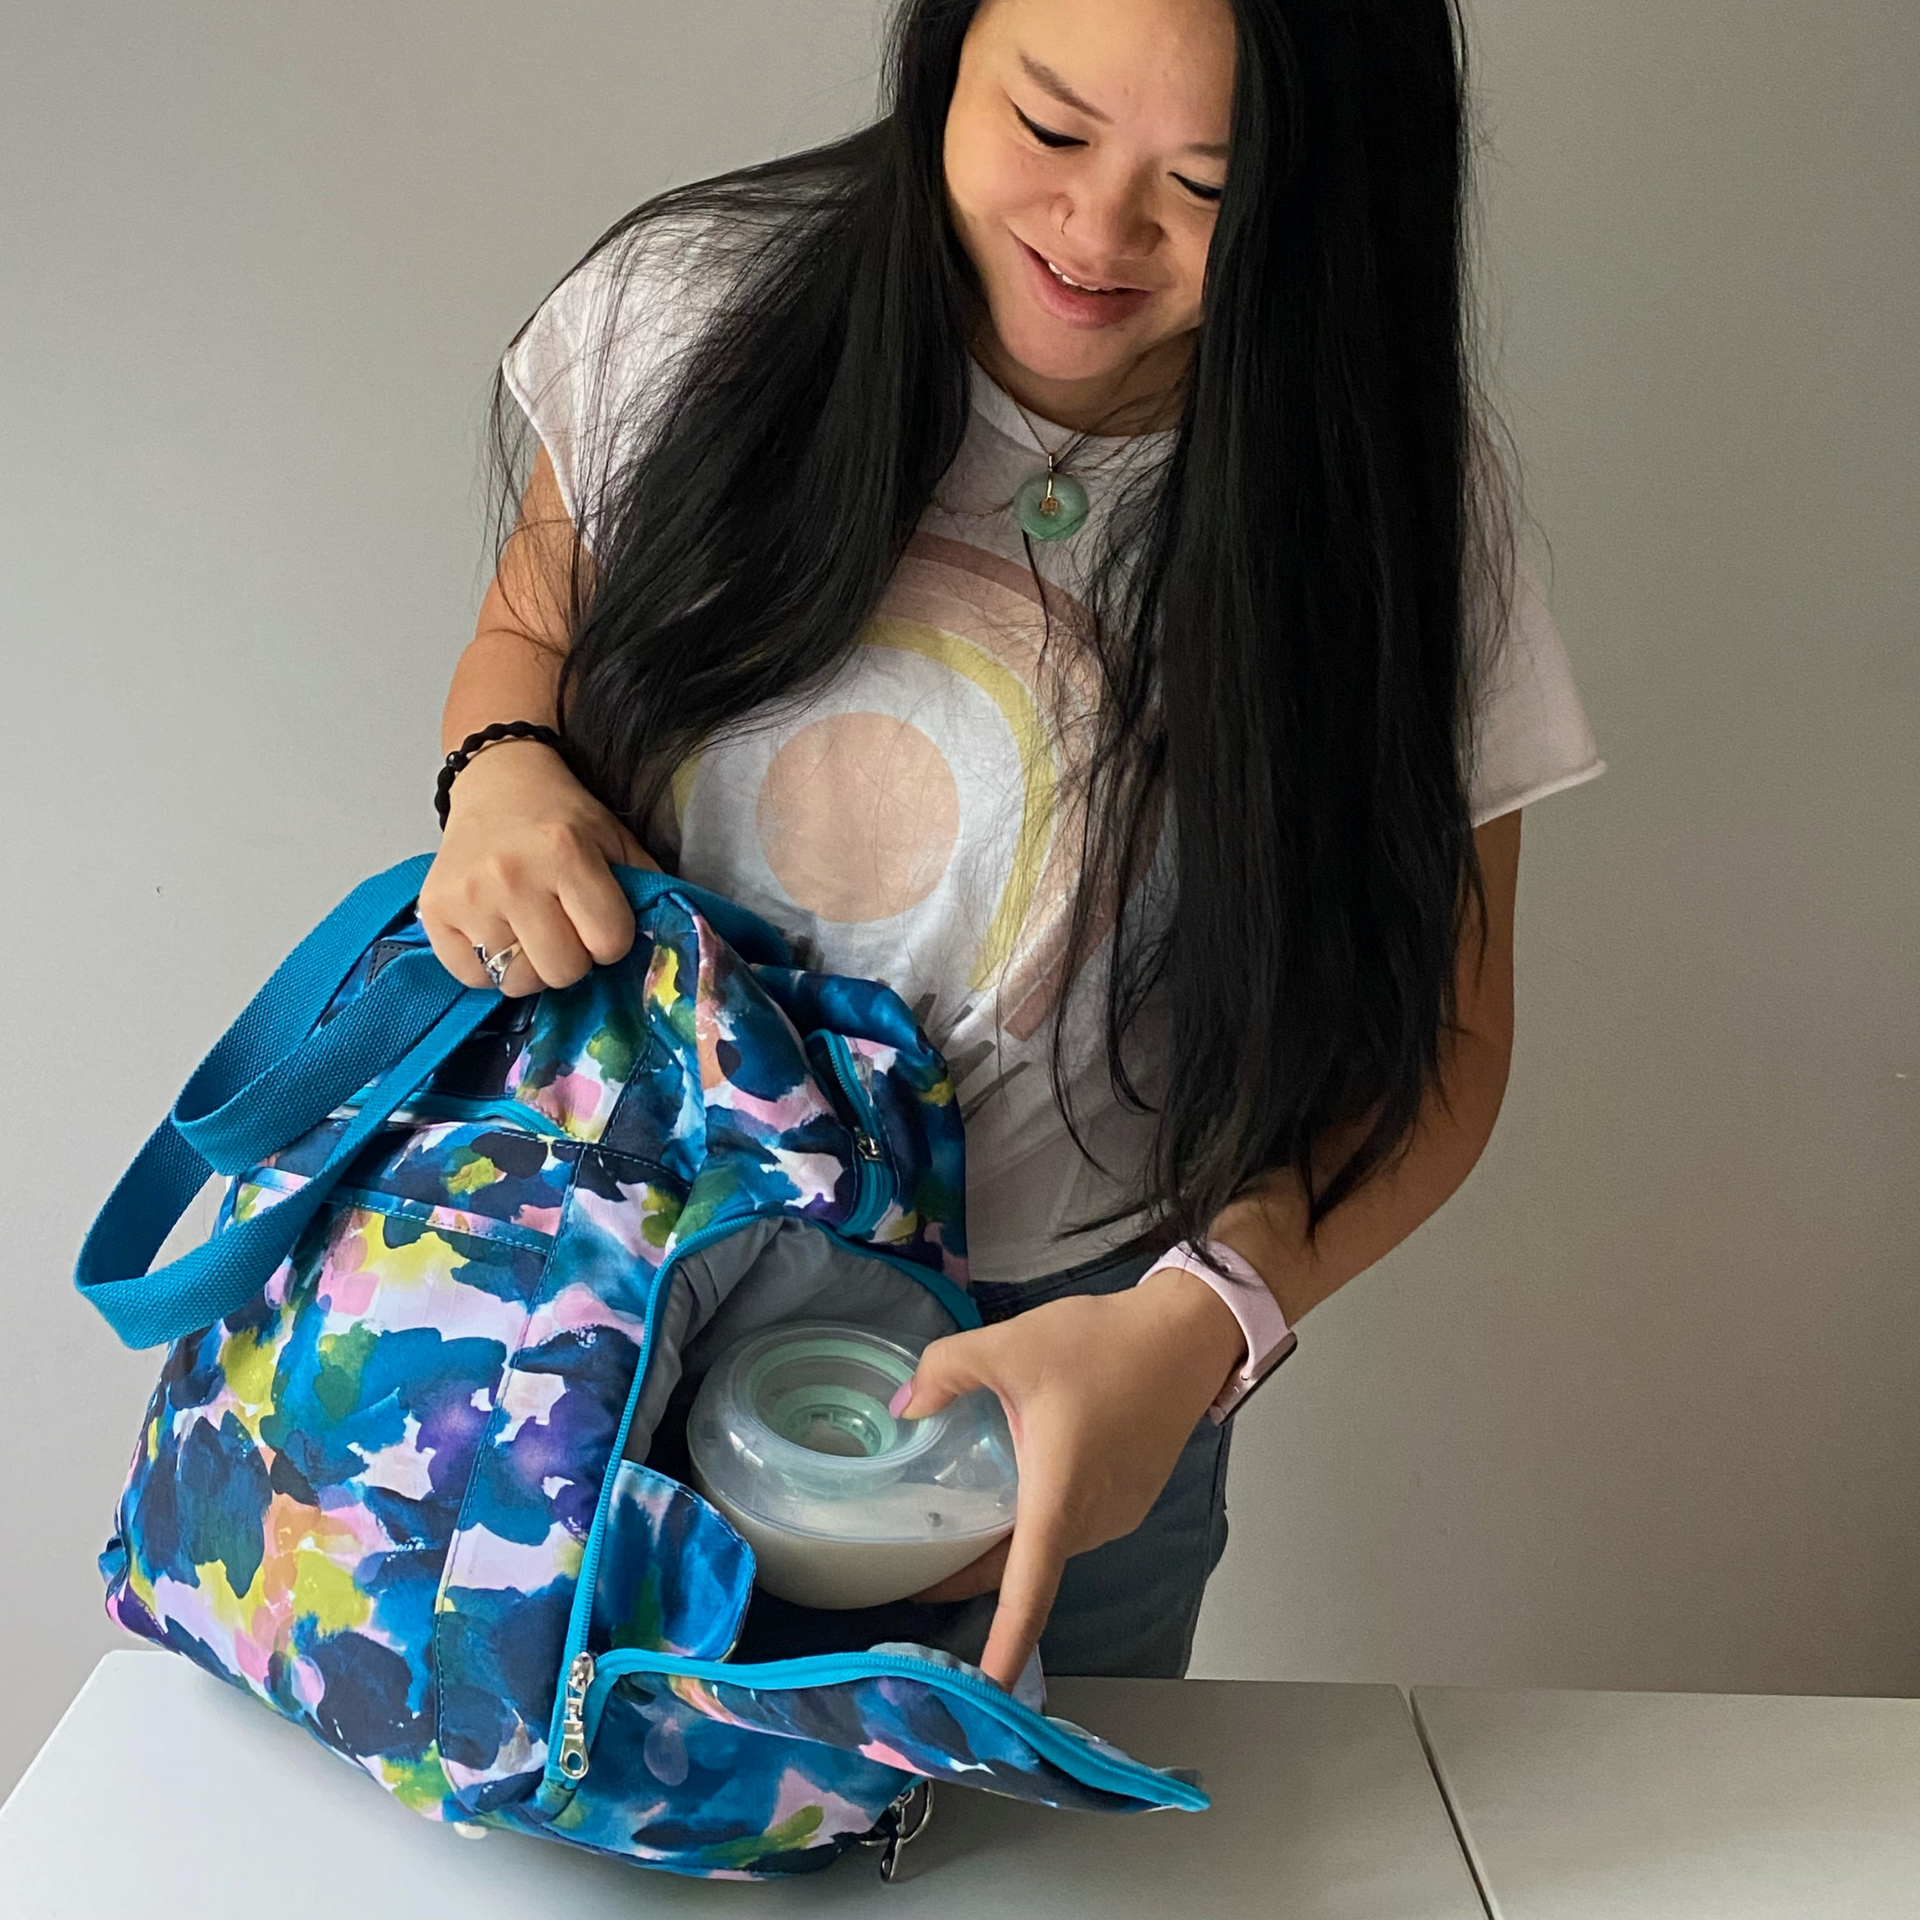 Buy Wholesale China Mommy Bag For Hospital Mom Bag Diaper Bag Tote